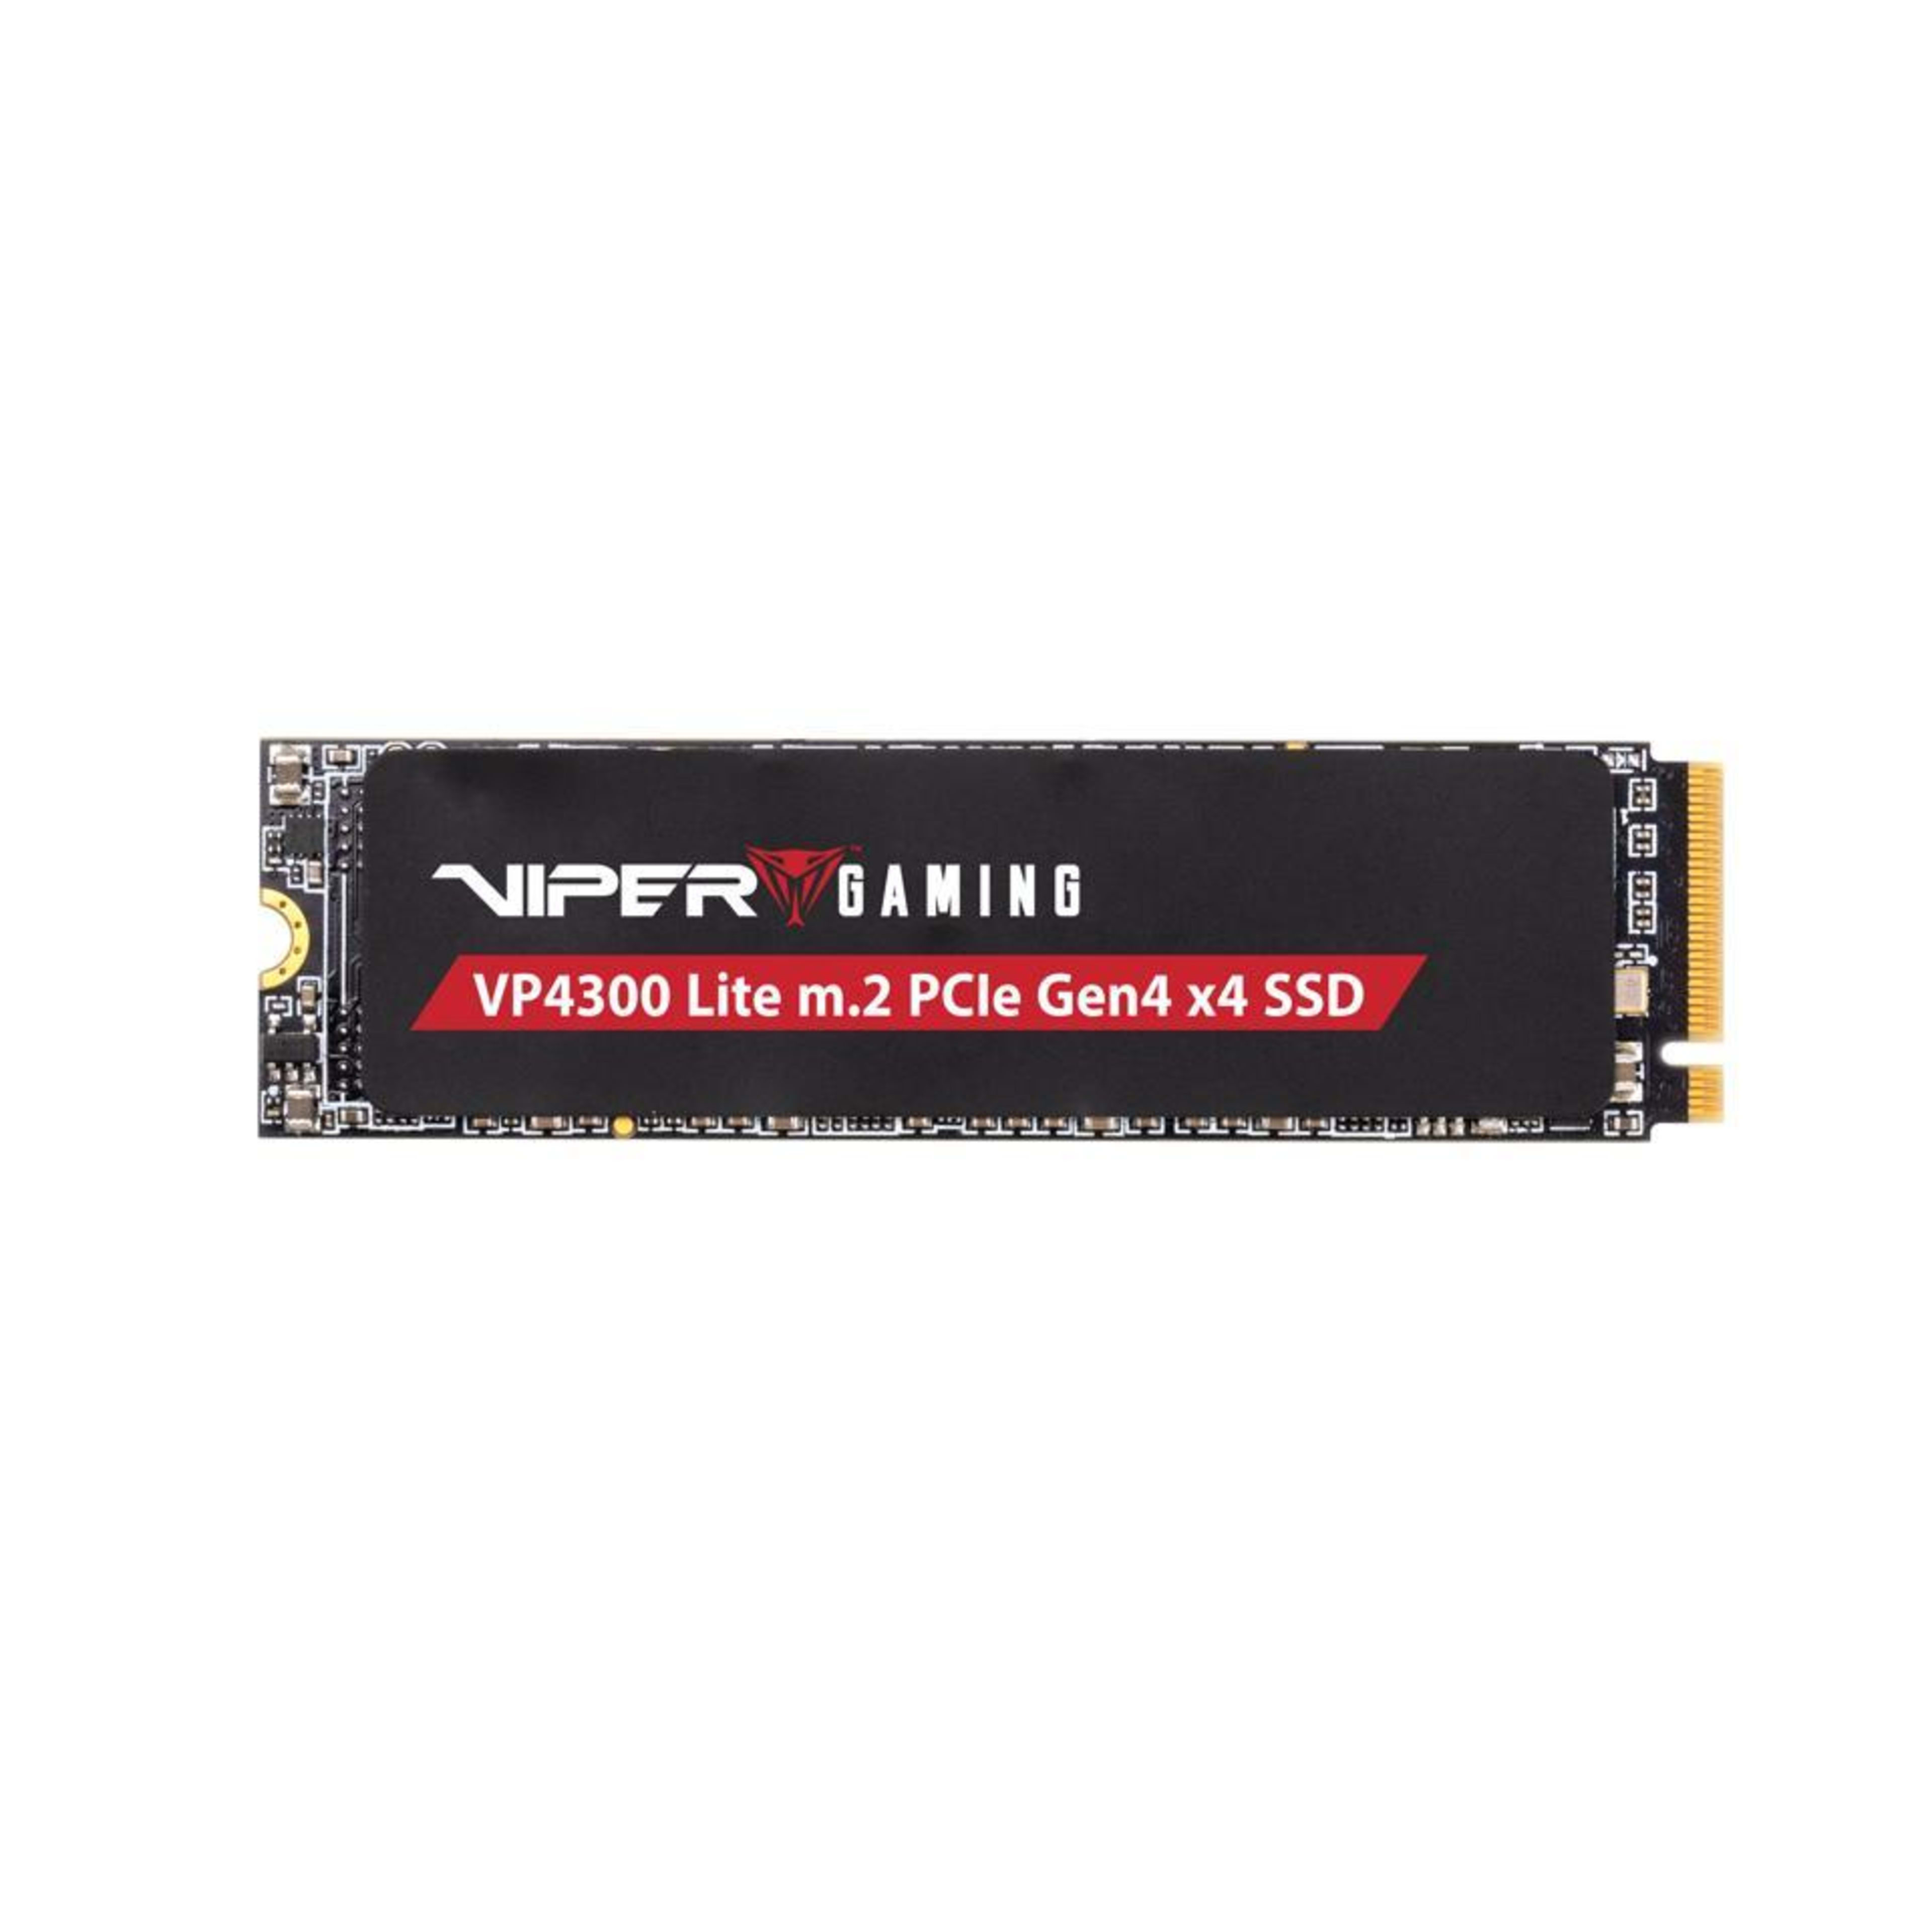 Patriot VP4300 Lite 500GB Internal SSD - NVMe PCIe Gen 4x4 - M.2 2280 - Solid State Drive